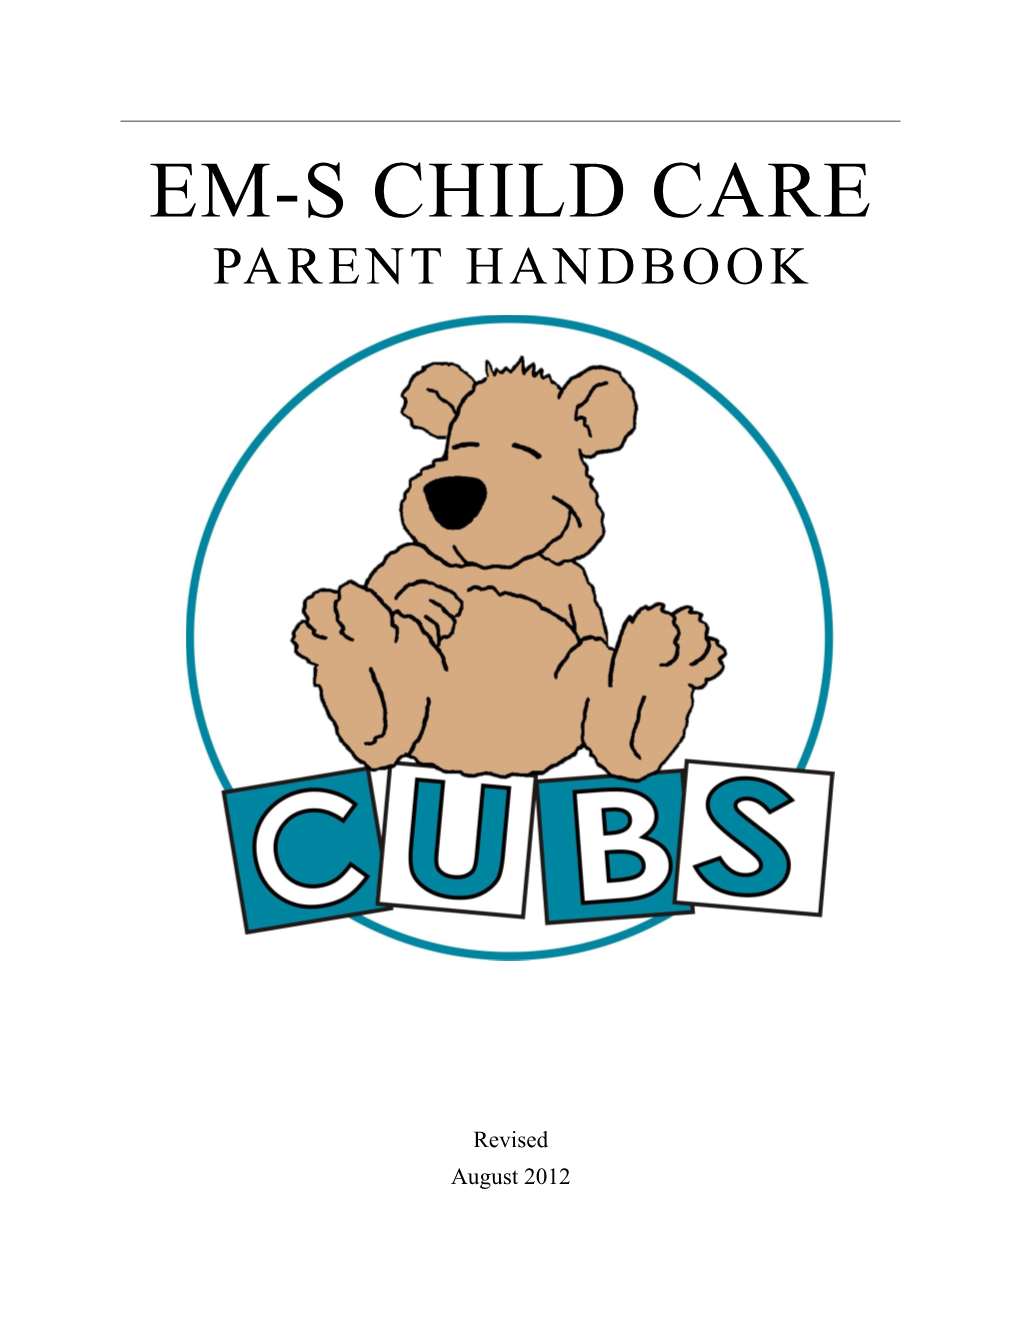 EM-S Child Care